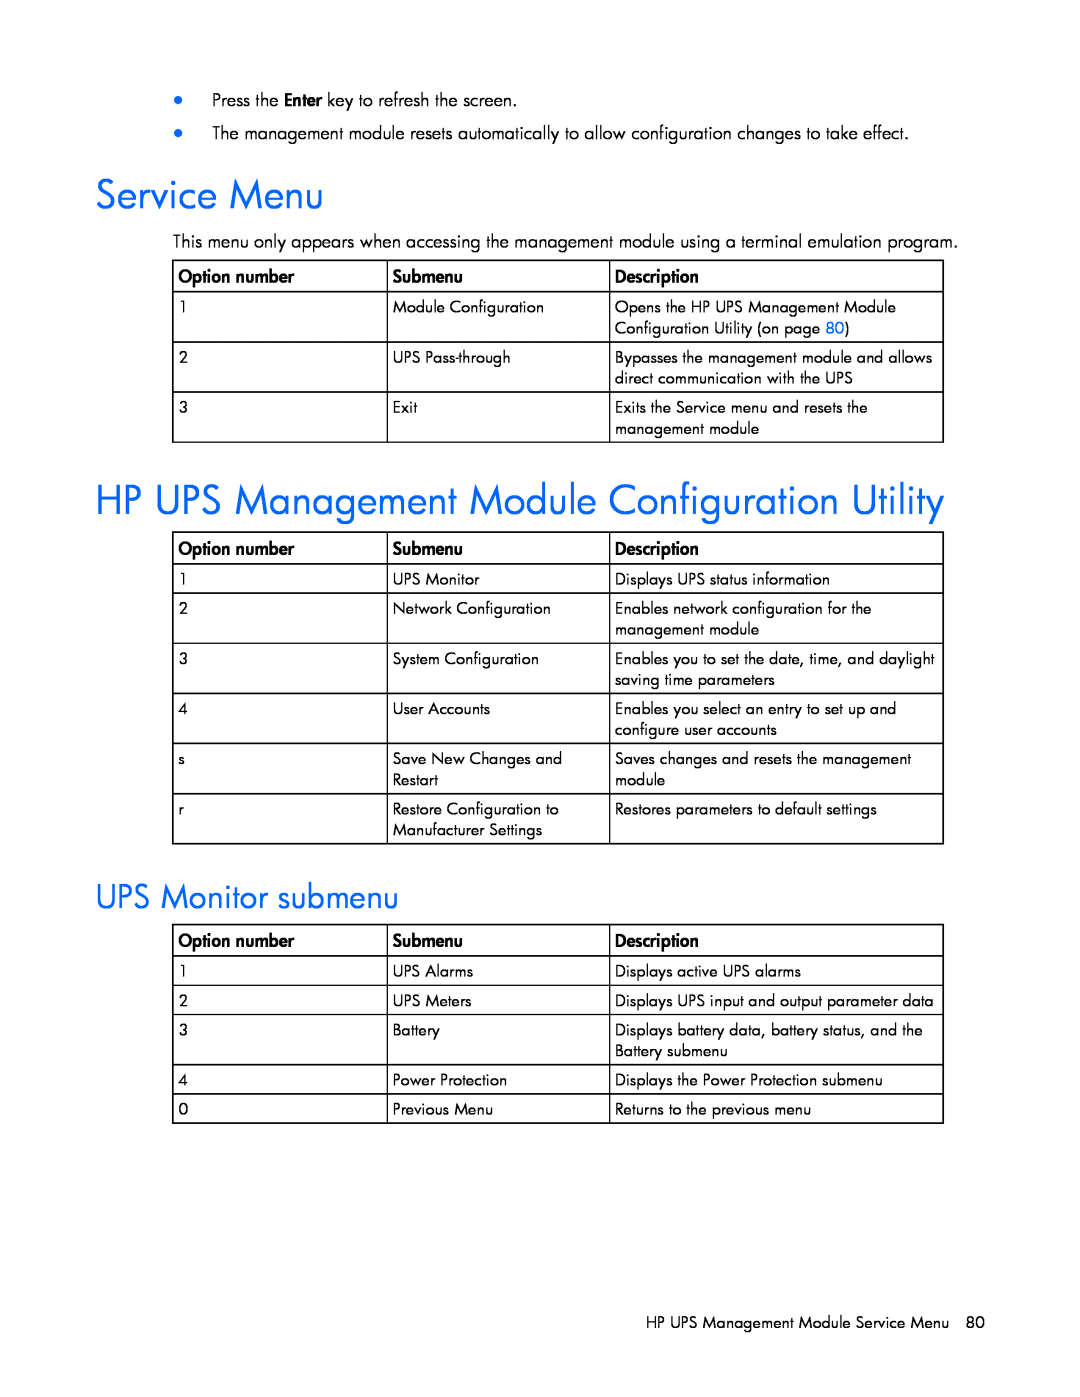 HP A1356A, A6584A, A1354A, A1353A, J4373A Service Menu, HP UPS Management Module Configuration Utility, UPS Monitor submenu 